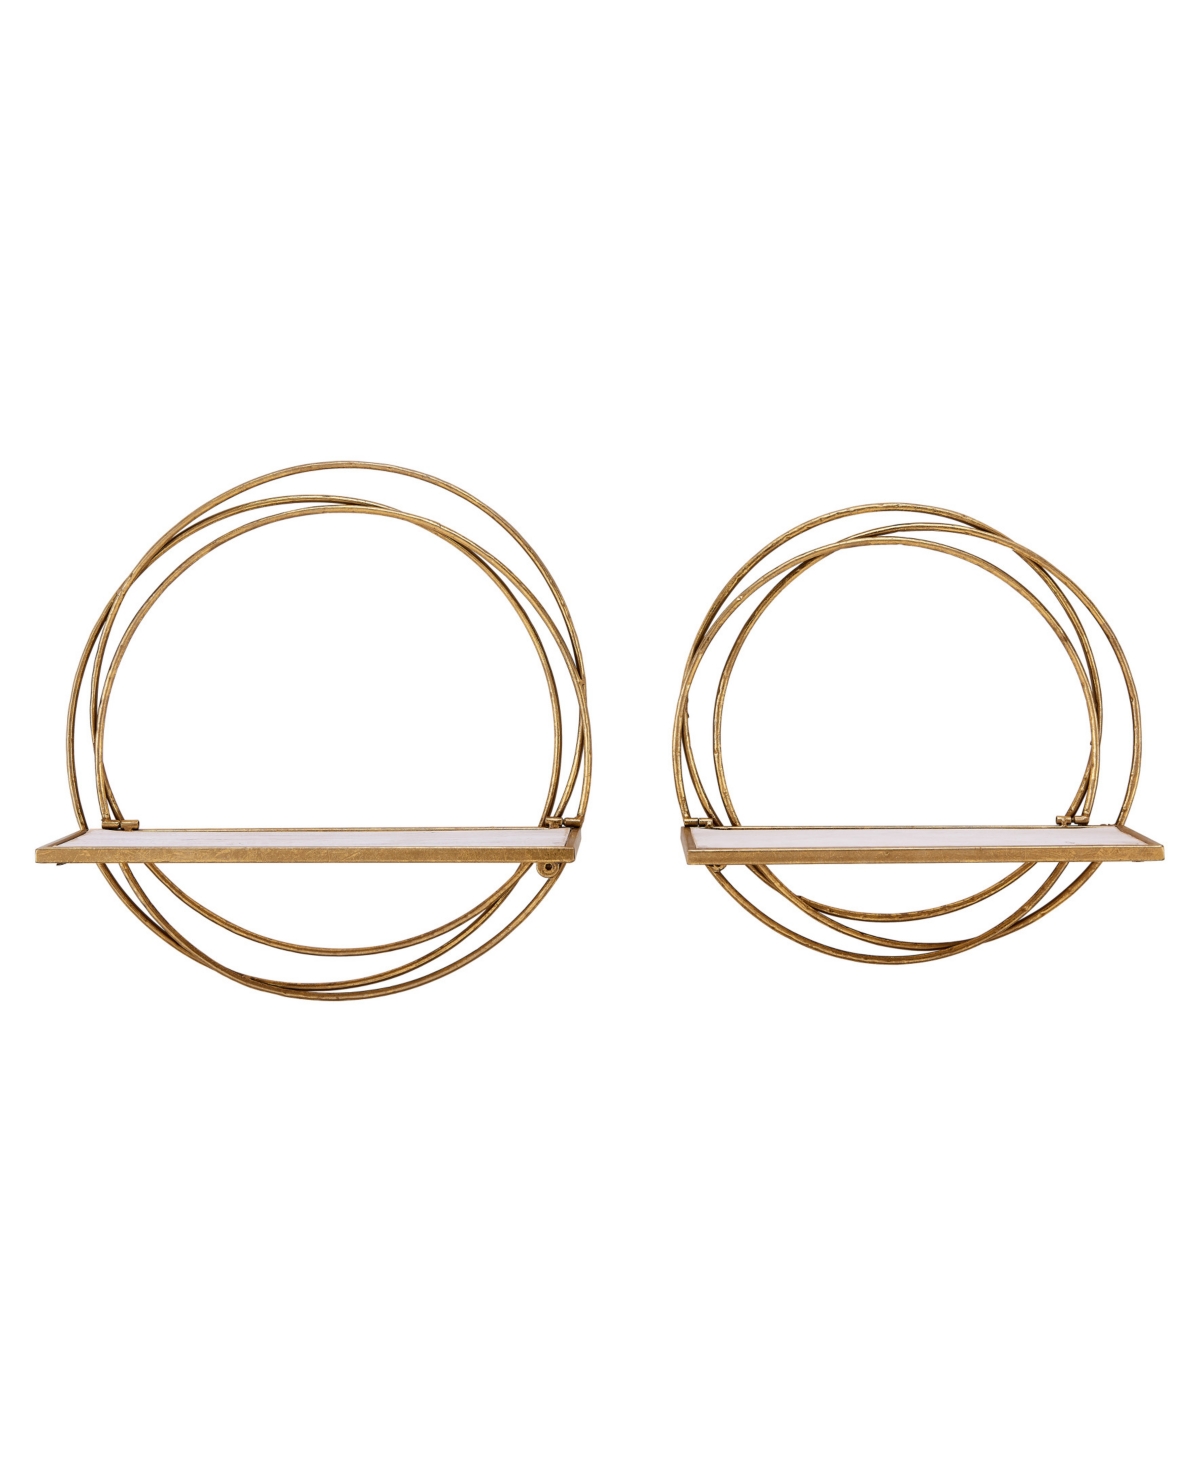 Golden-Tone Rings Floating Wall Shelves, Set of 2 - Gold